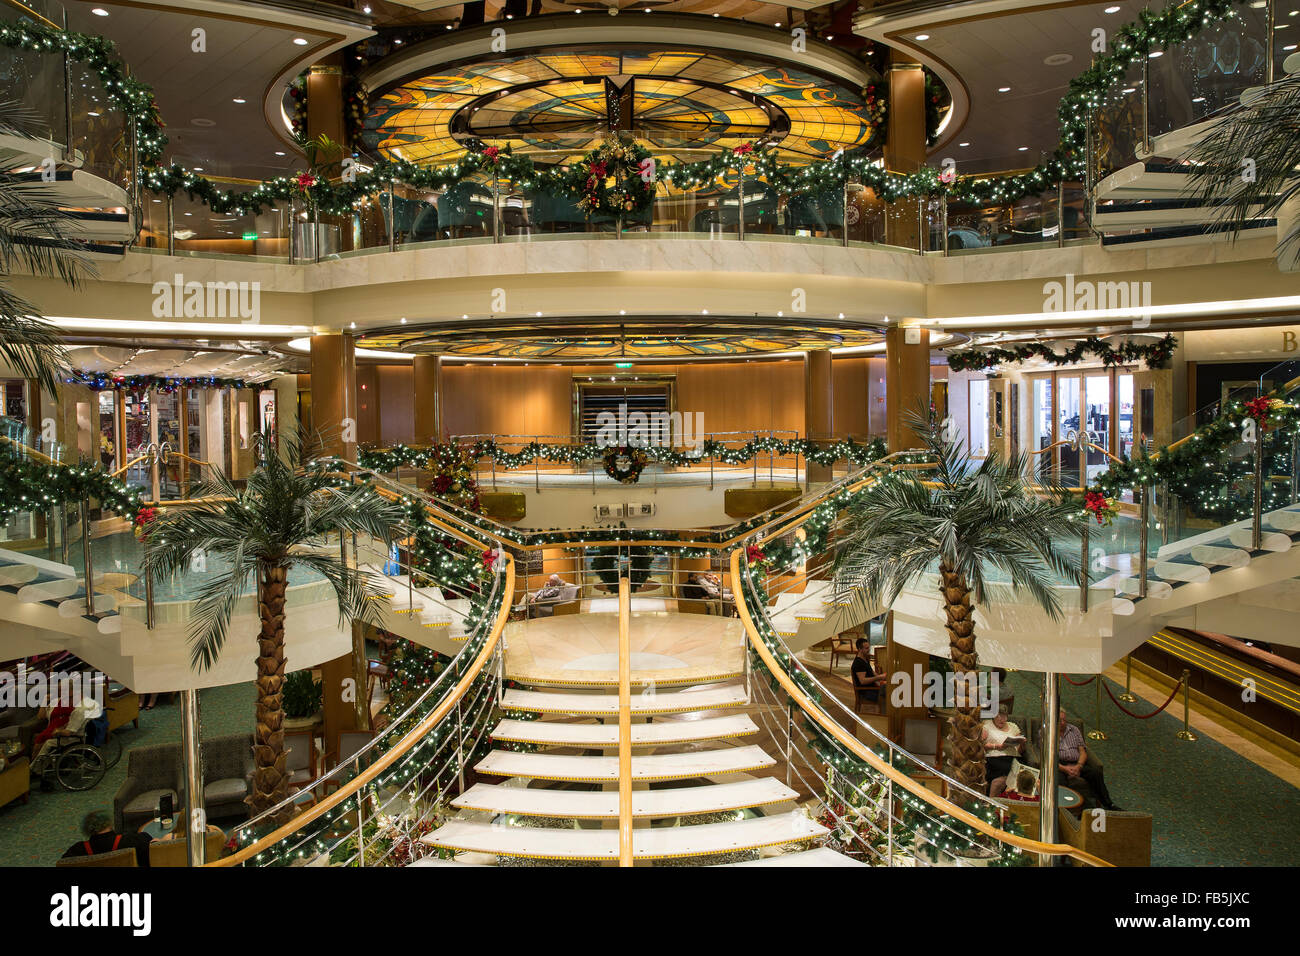 Christmas decorations adorn the atrium of the Oceana a cruise liner